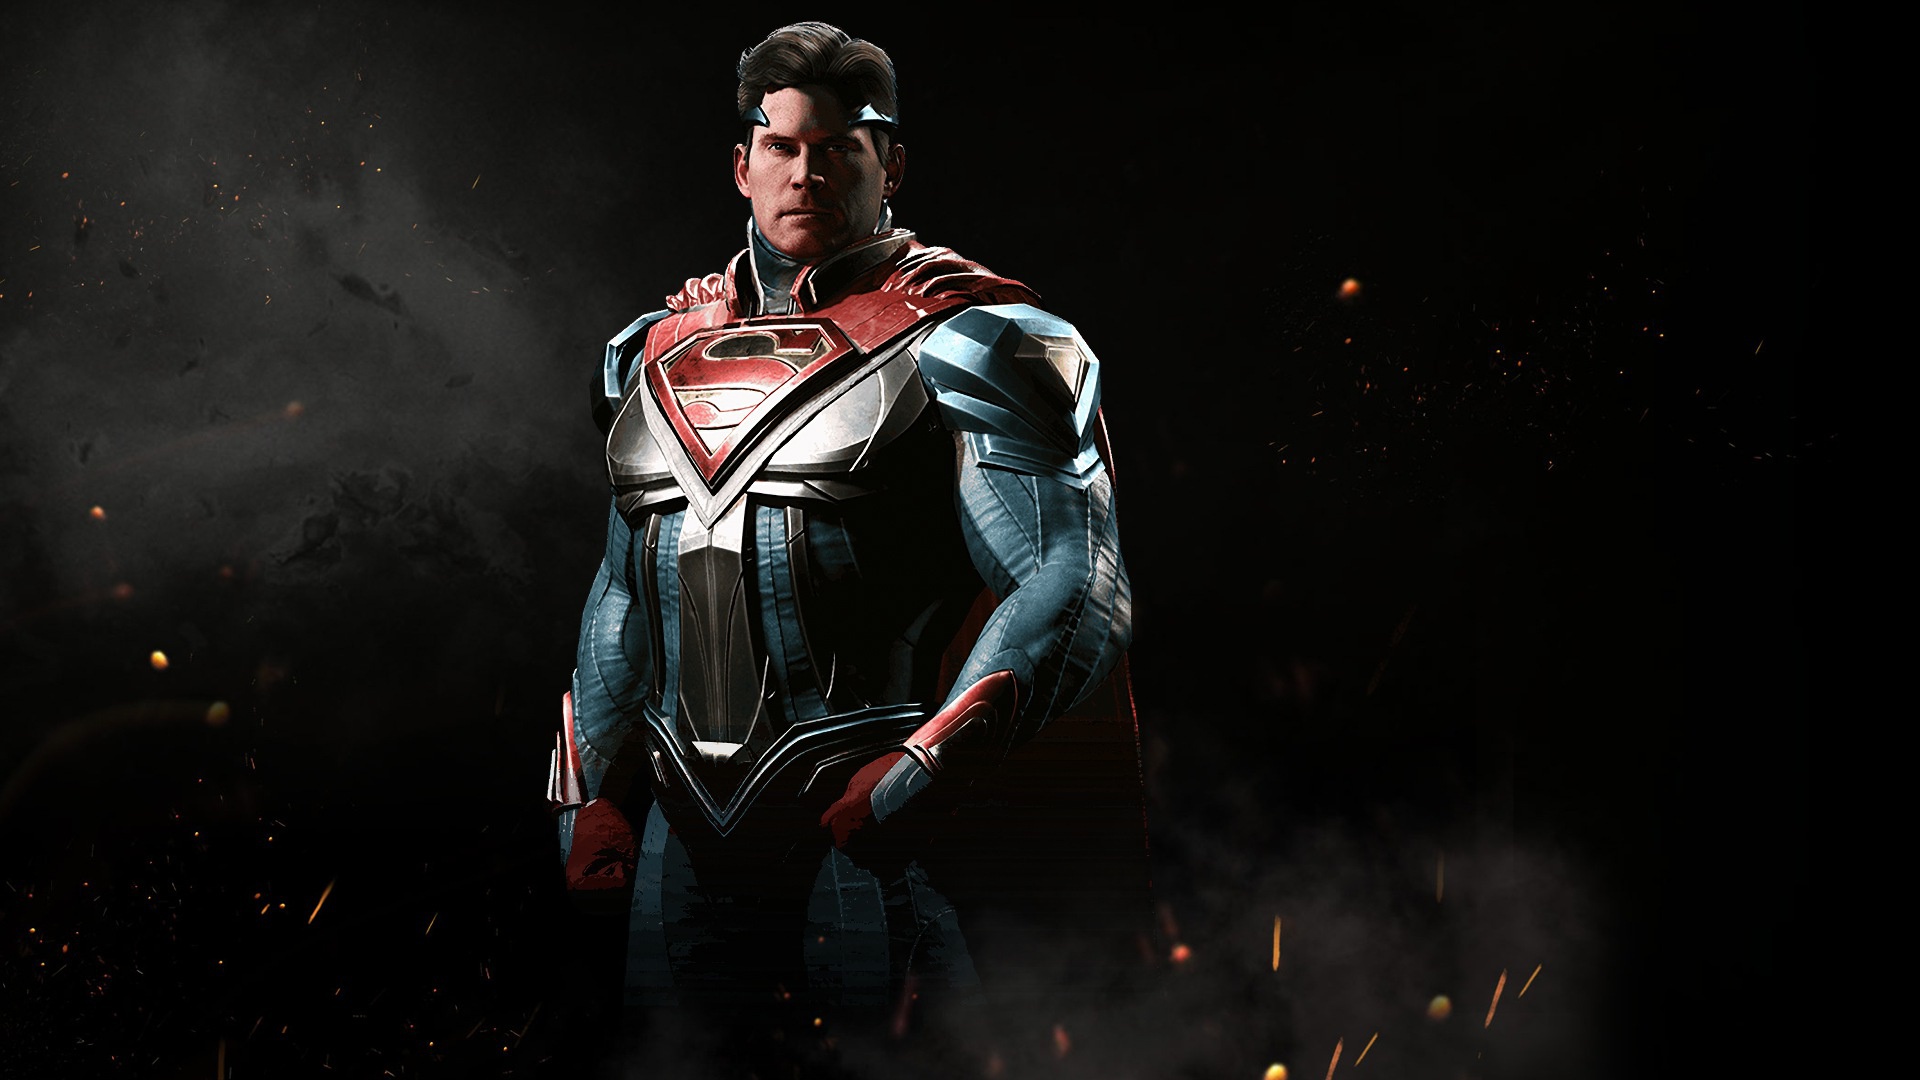 injustice wallpaper,superman,superhero,fictional character,justice league,darkness